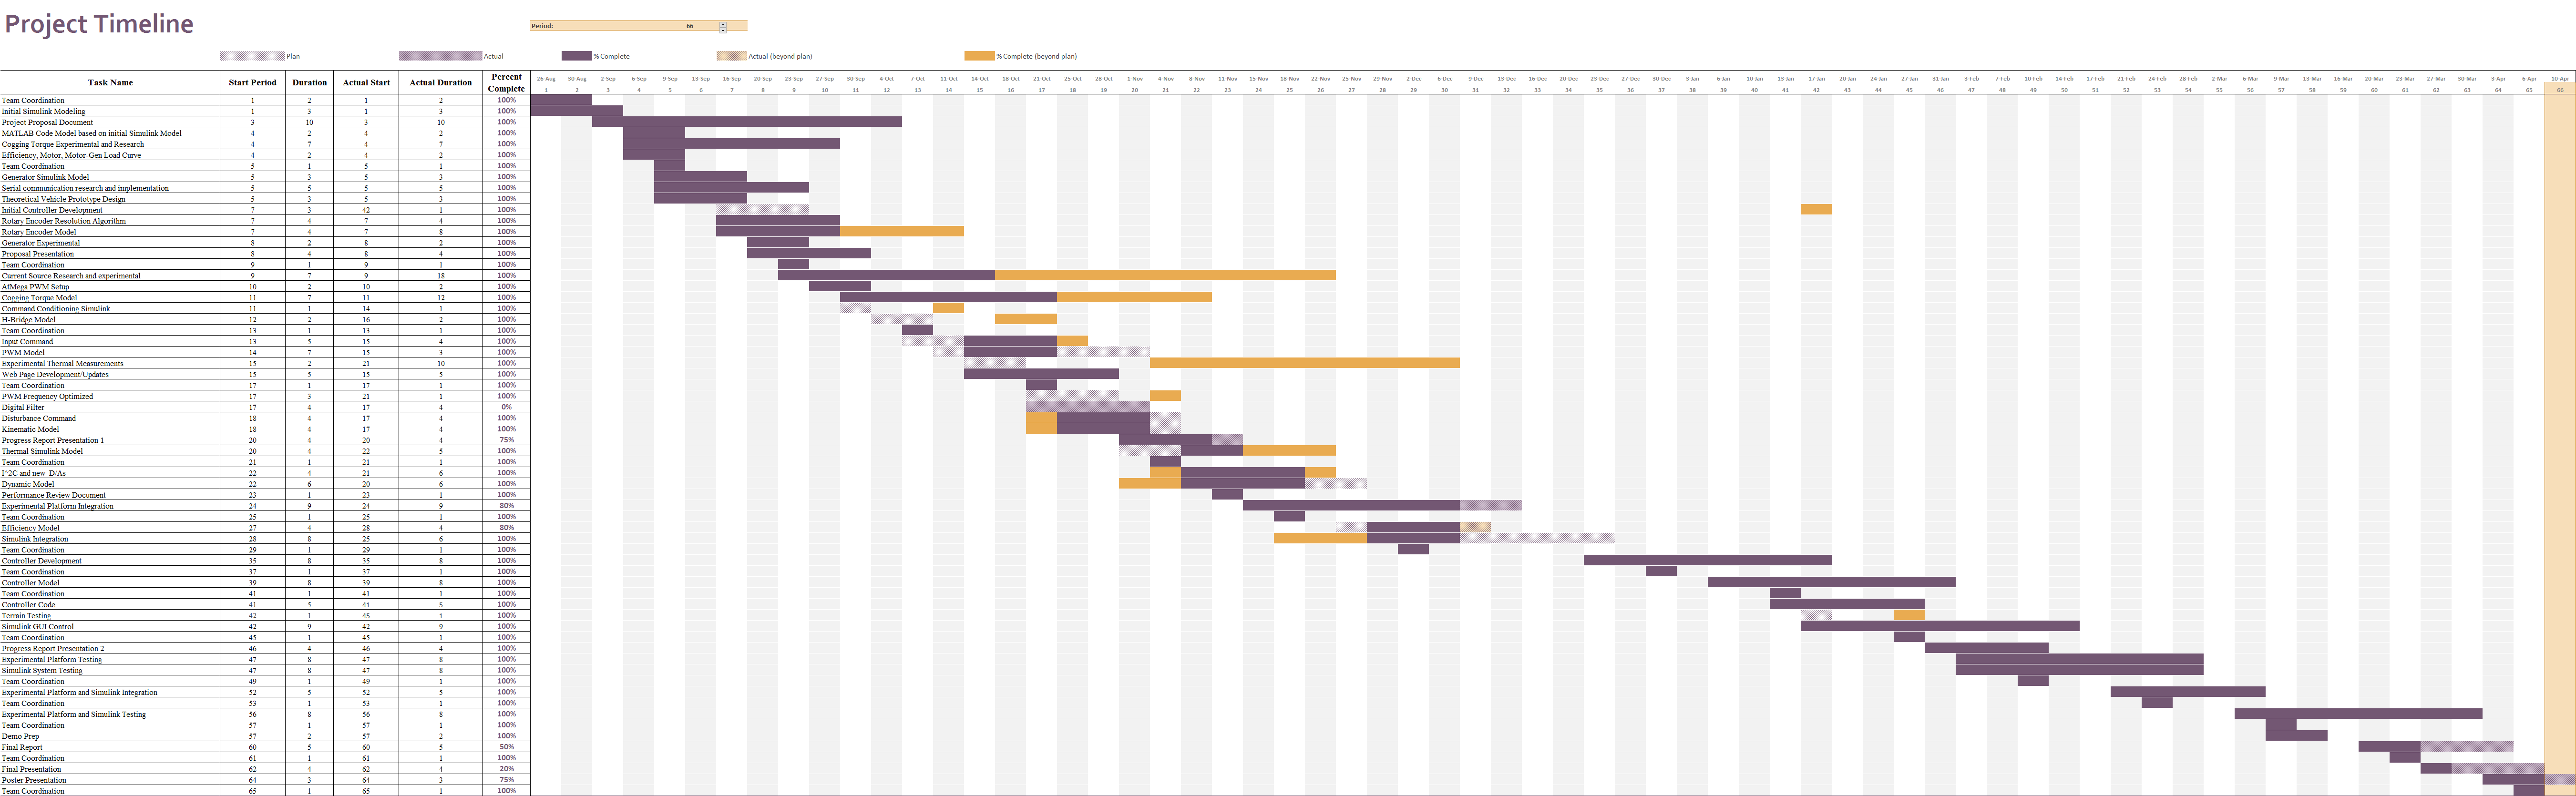 Project Gantt Chart as of 4/12/16